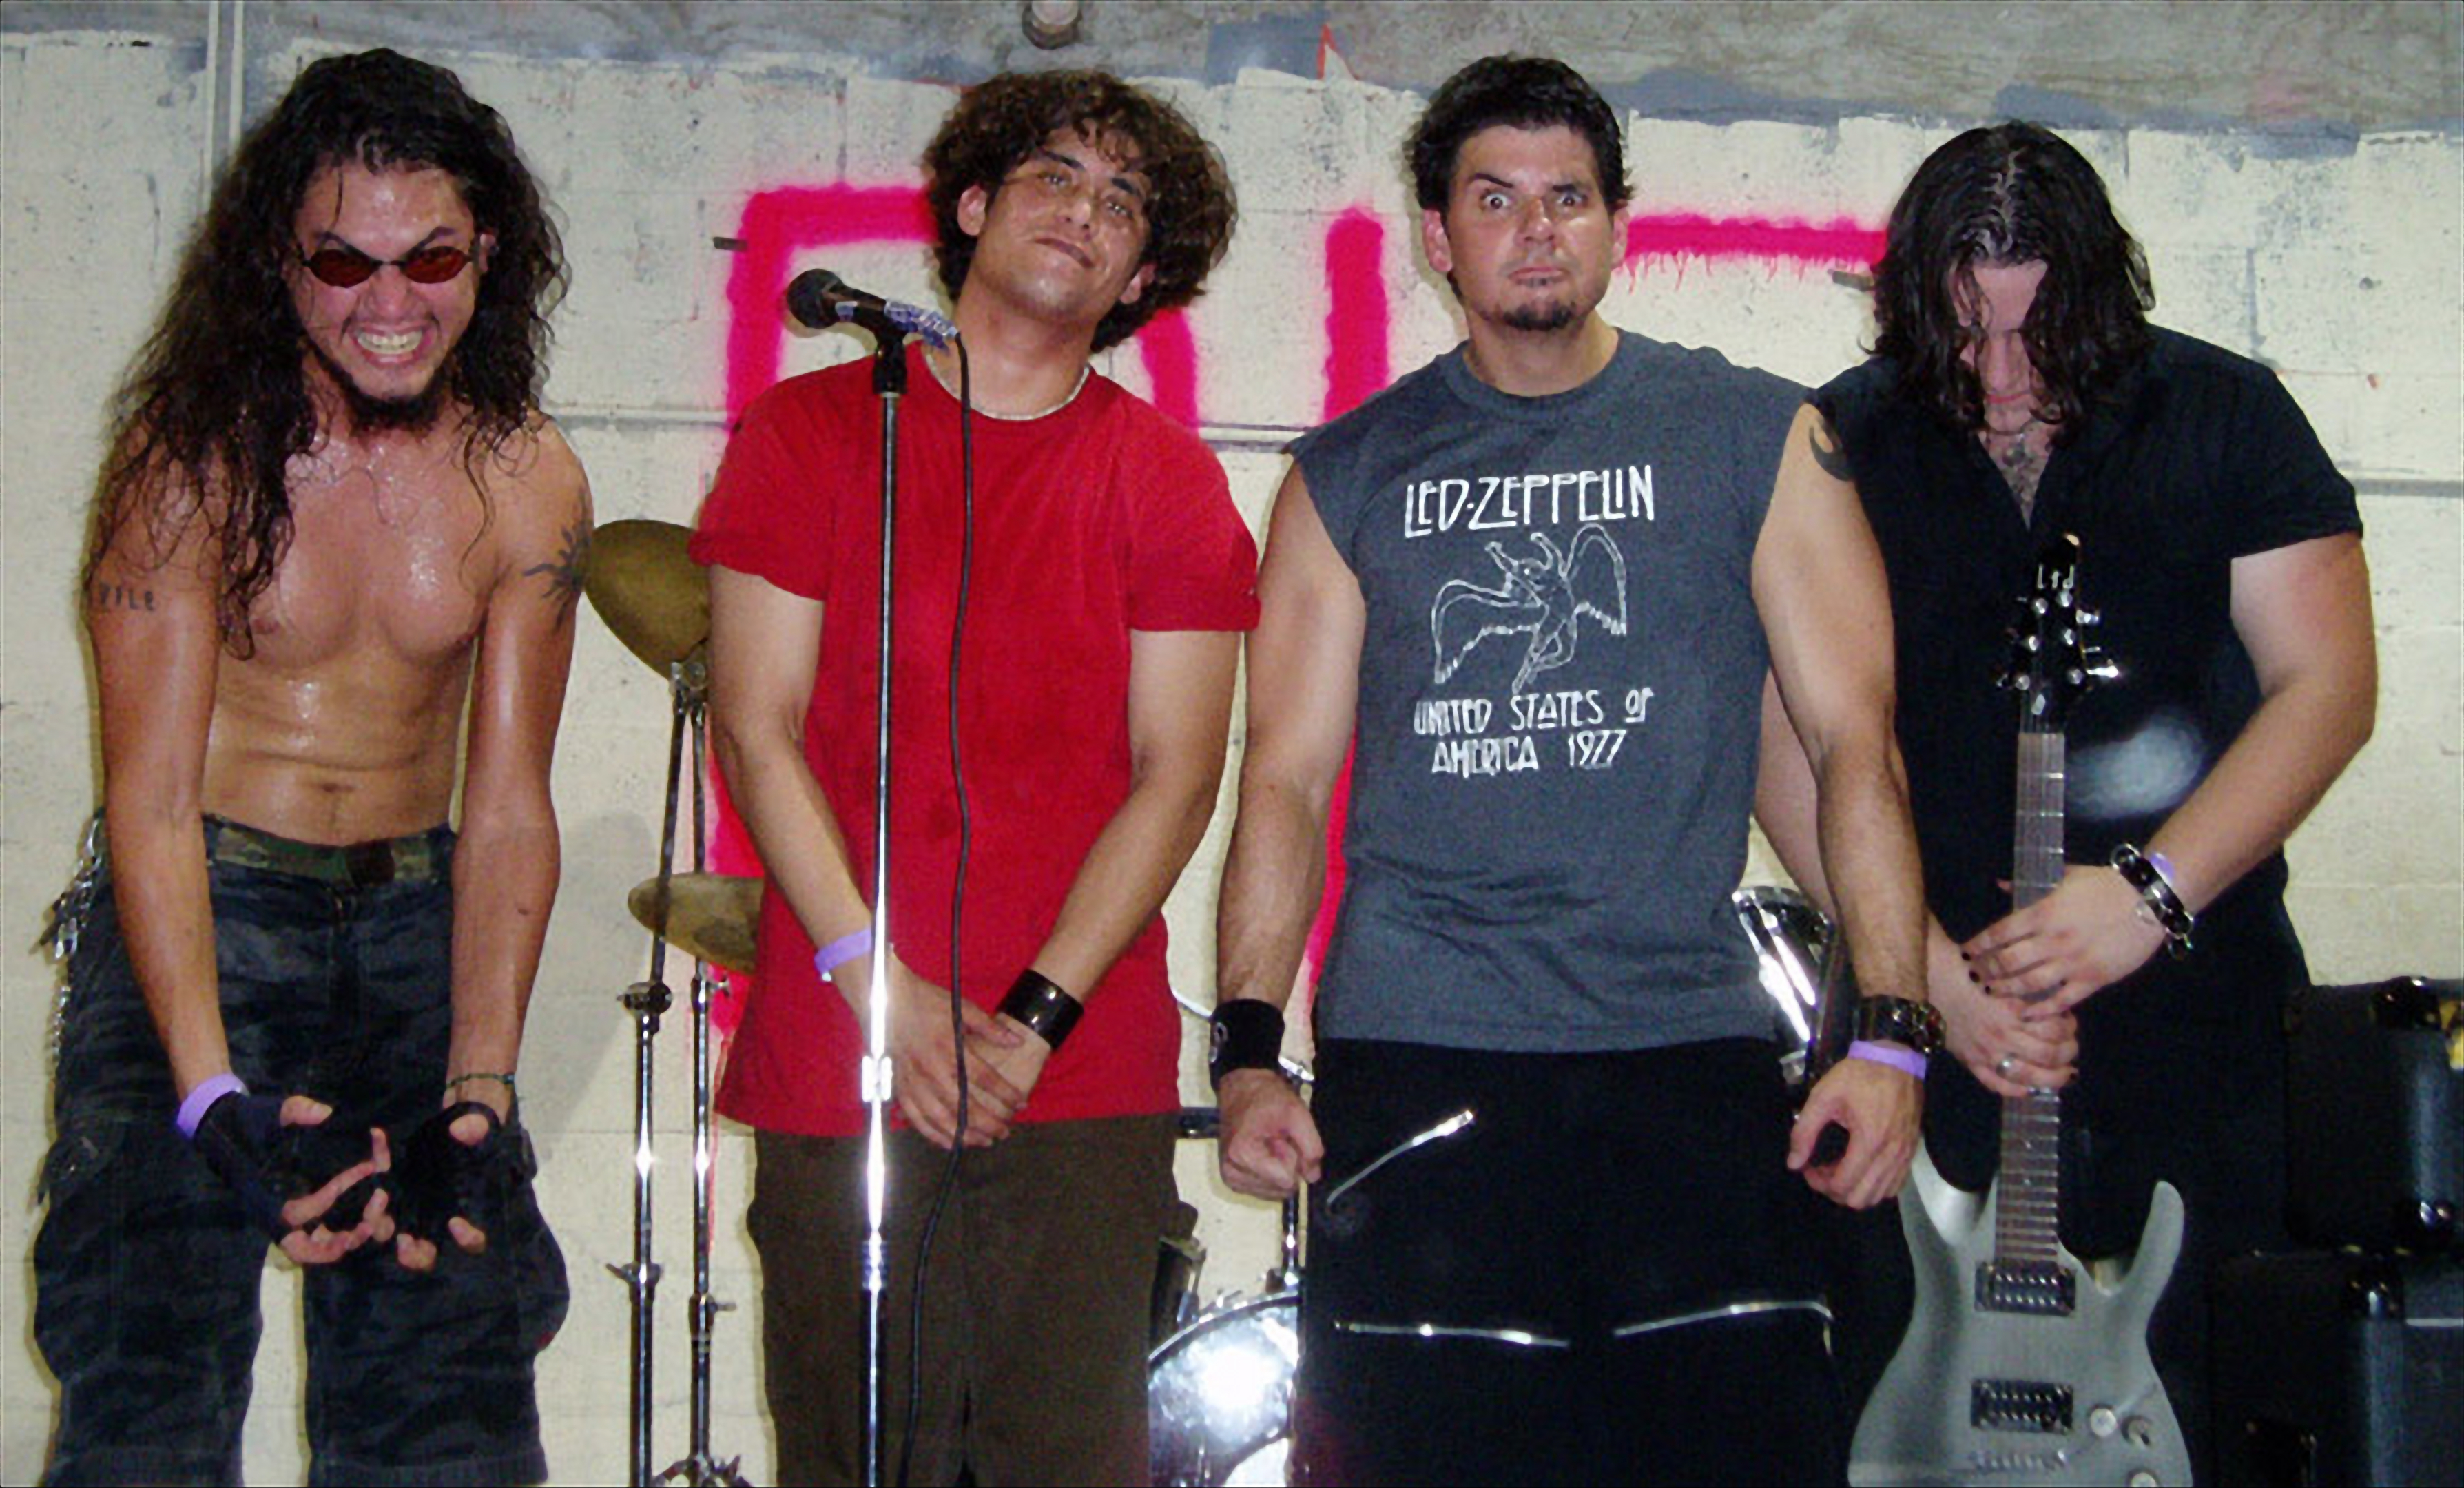 Osiris Rising - Line up after the show - Pompano Indoor Skate Park (PIS Skatepark) FL - July 11, 2003 - Photo by Jodie Bonner